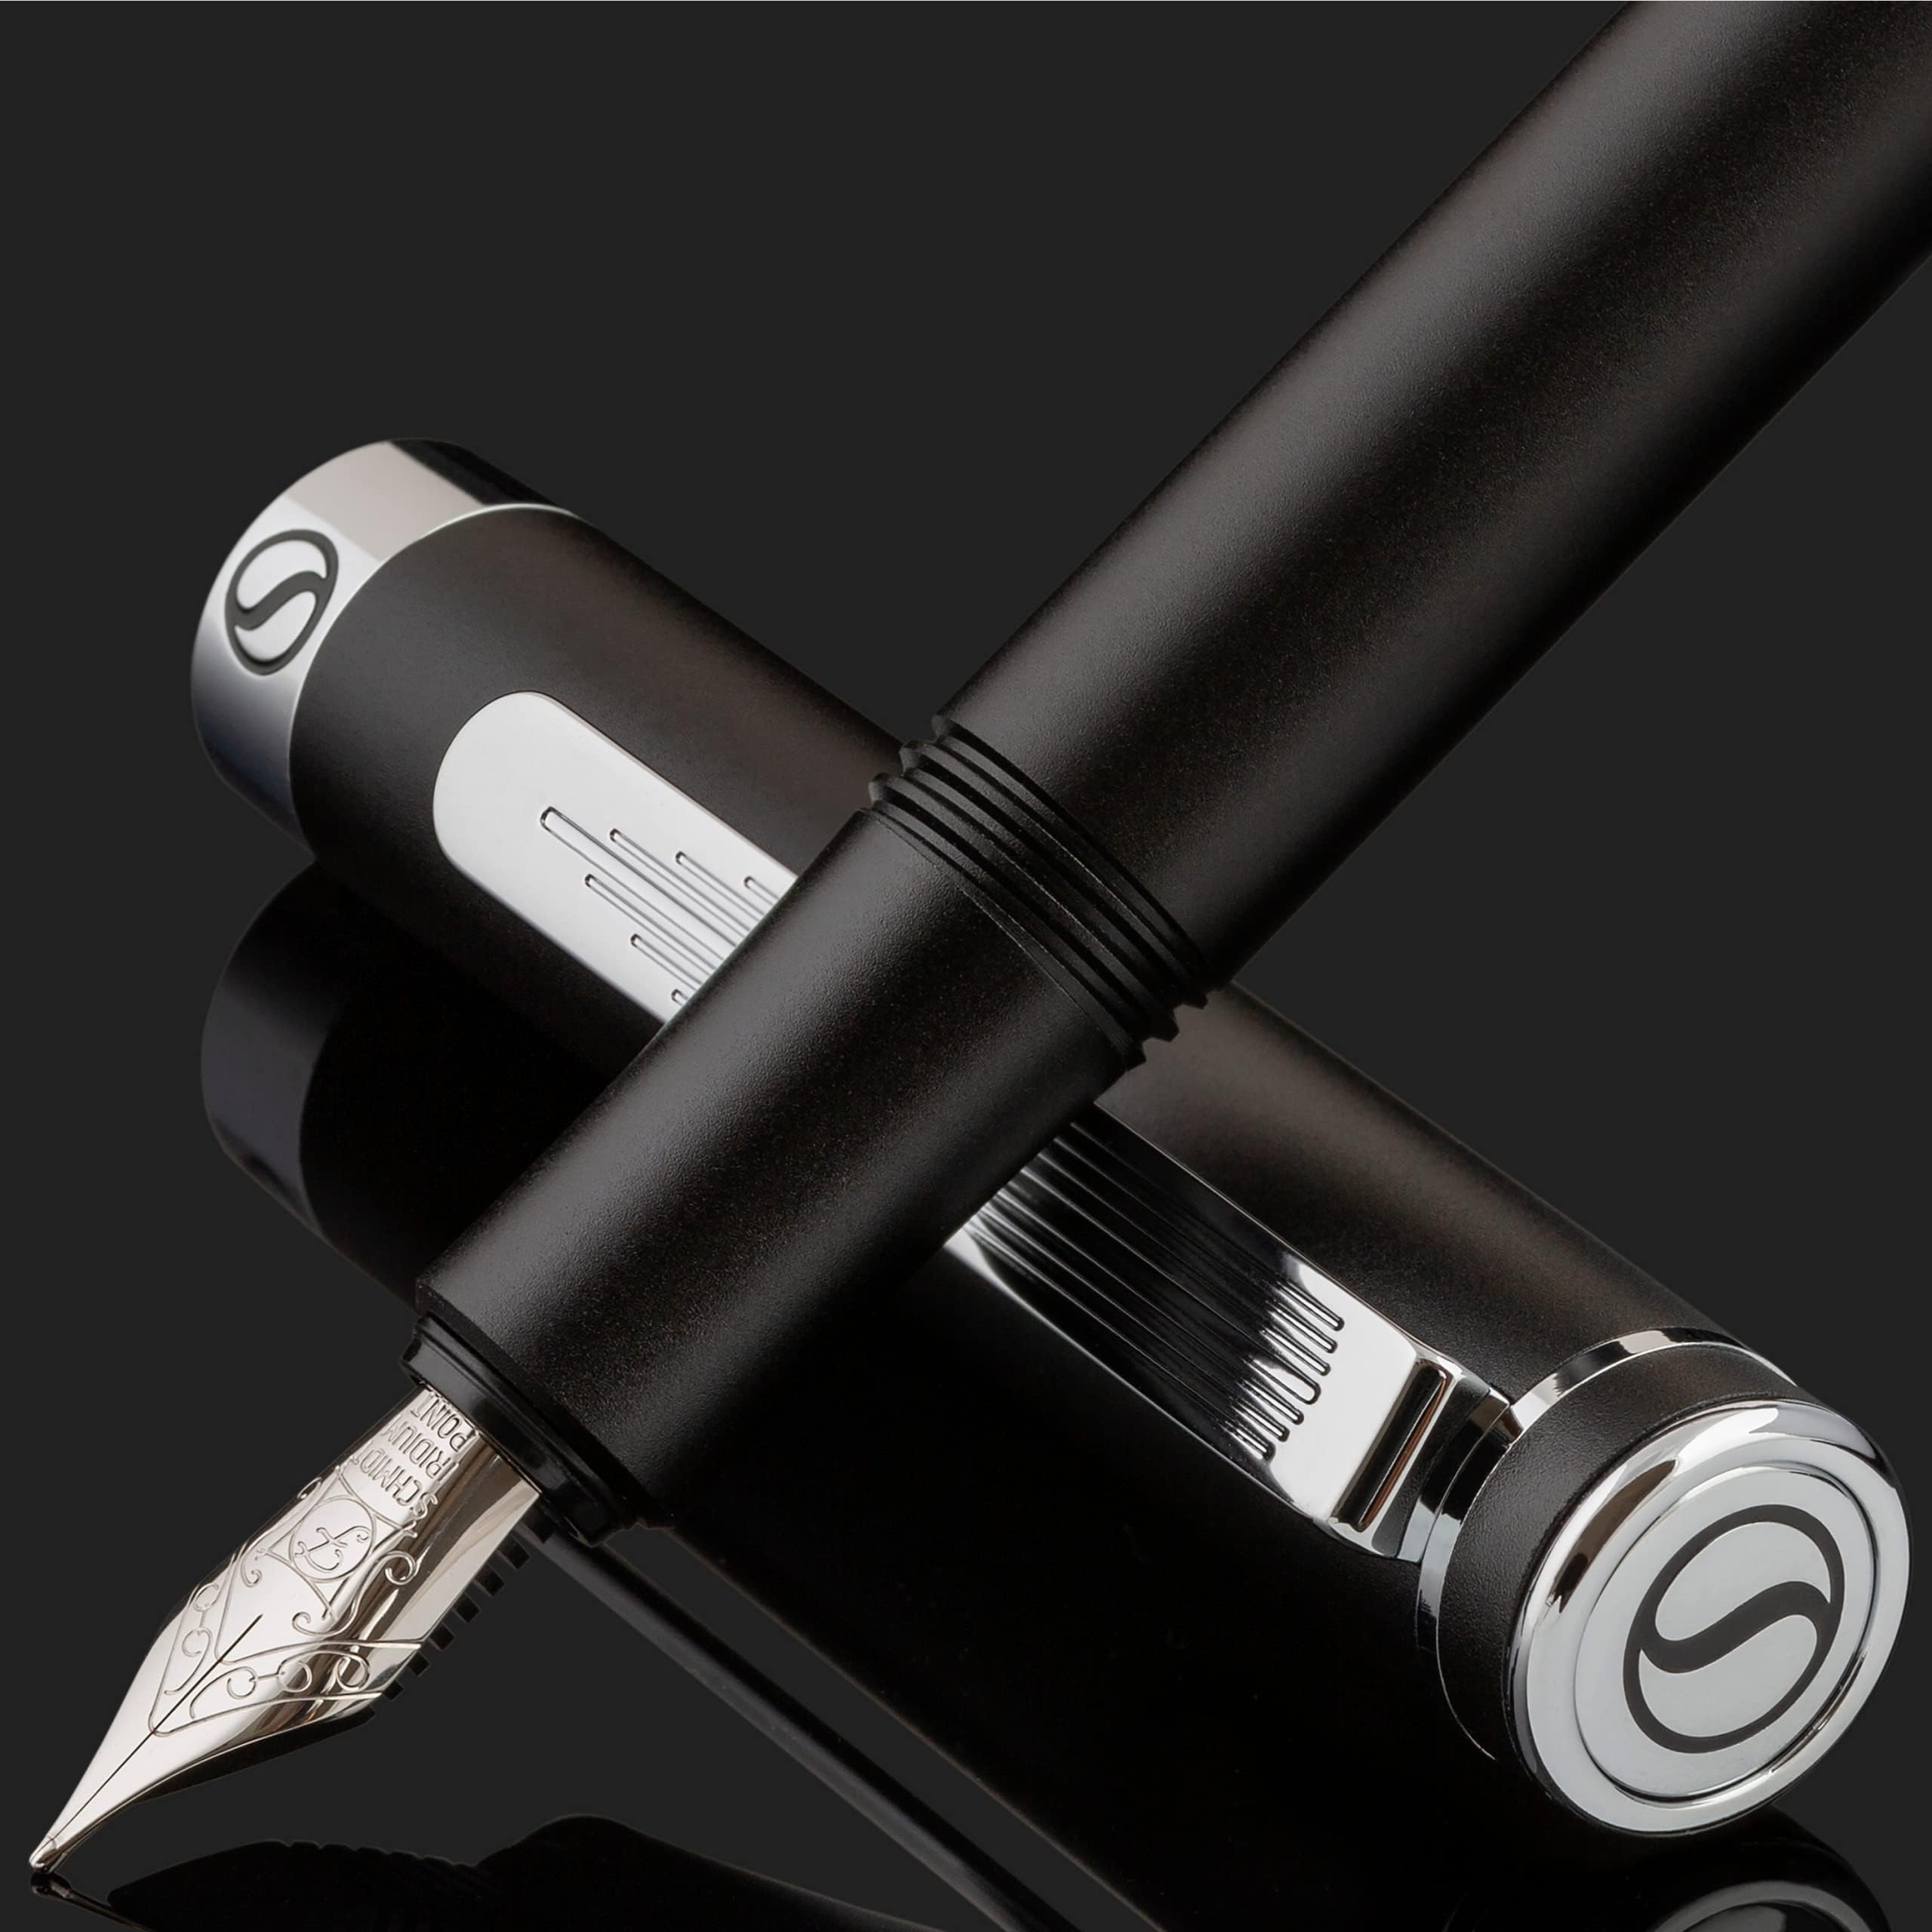 Scriveiner Black Lacquer Fountain Pen Stunning Algeria